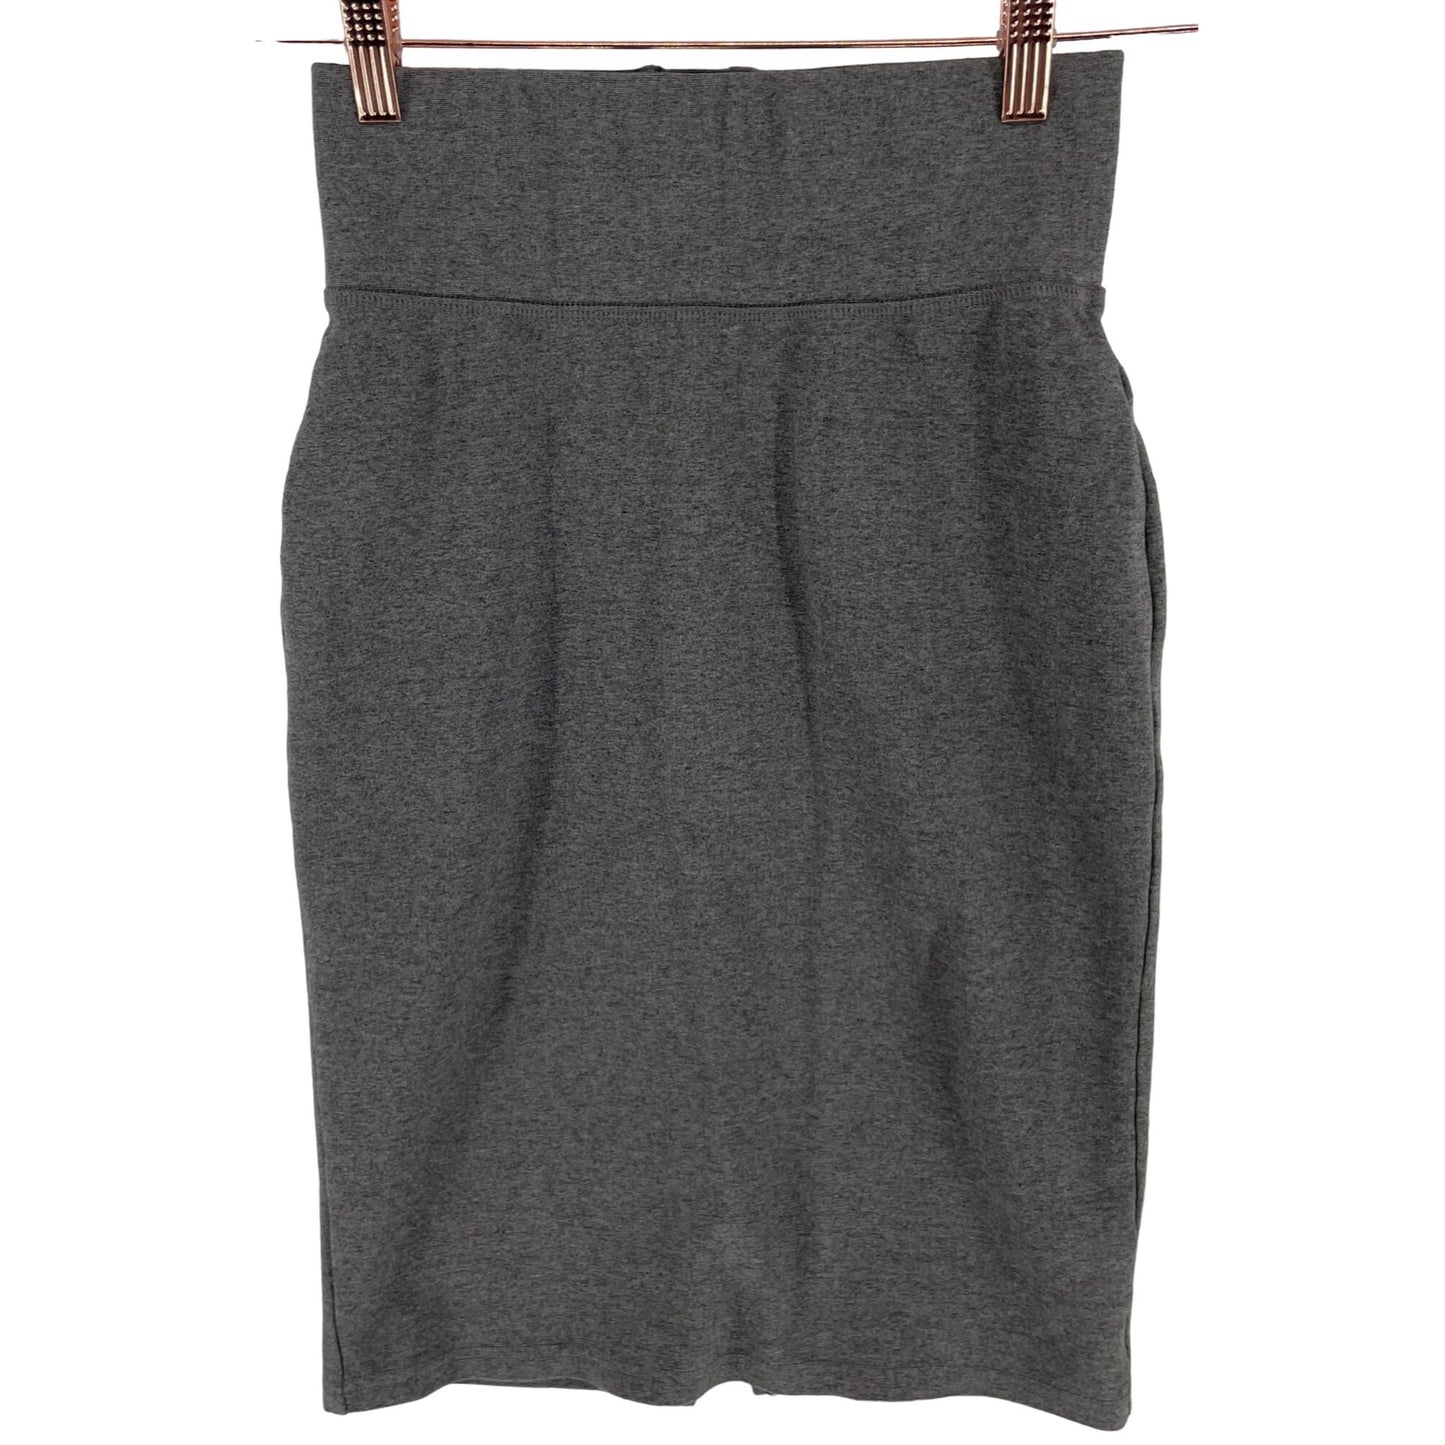 Active USA Women's Size Small Grey Elastic Stretch Waist Pencil Skirt